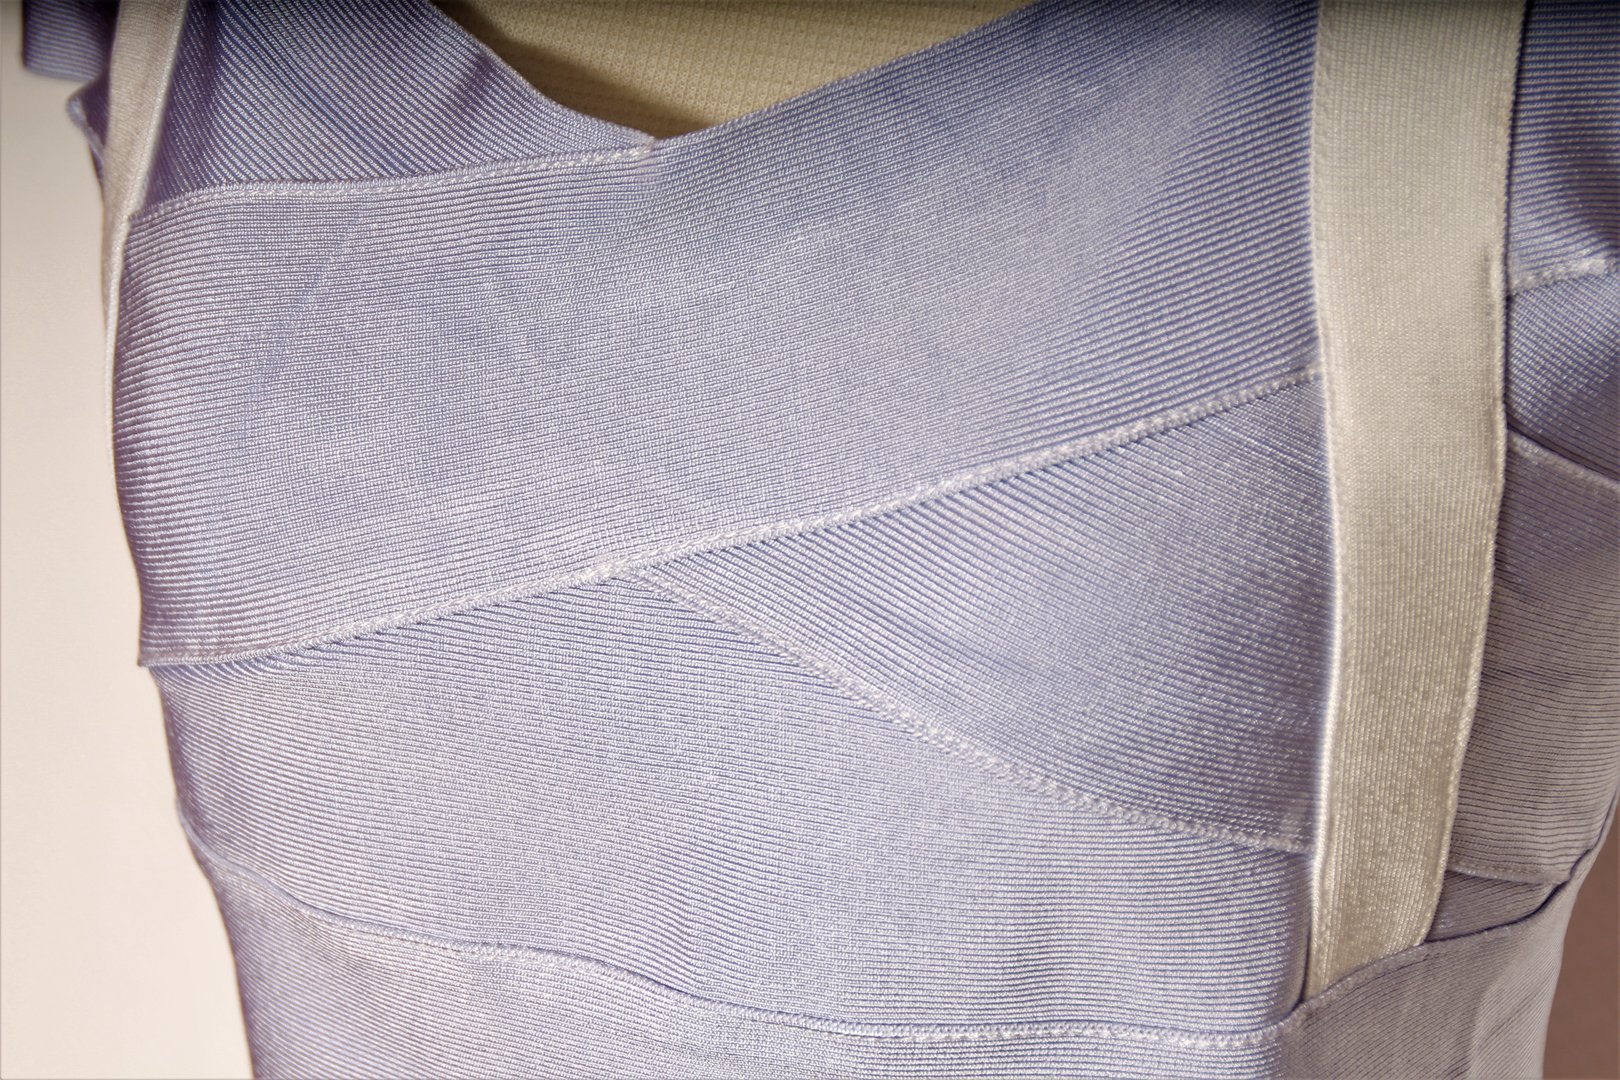 2 Piece Combi Dress in white-light blue Figure-Hugging